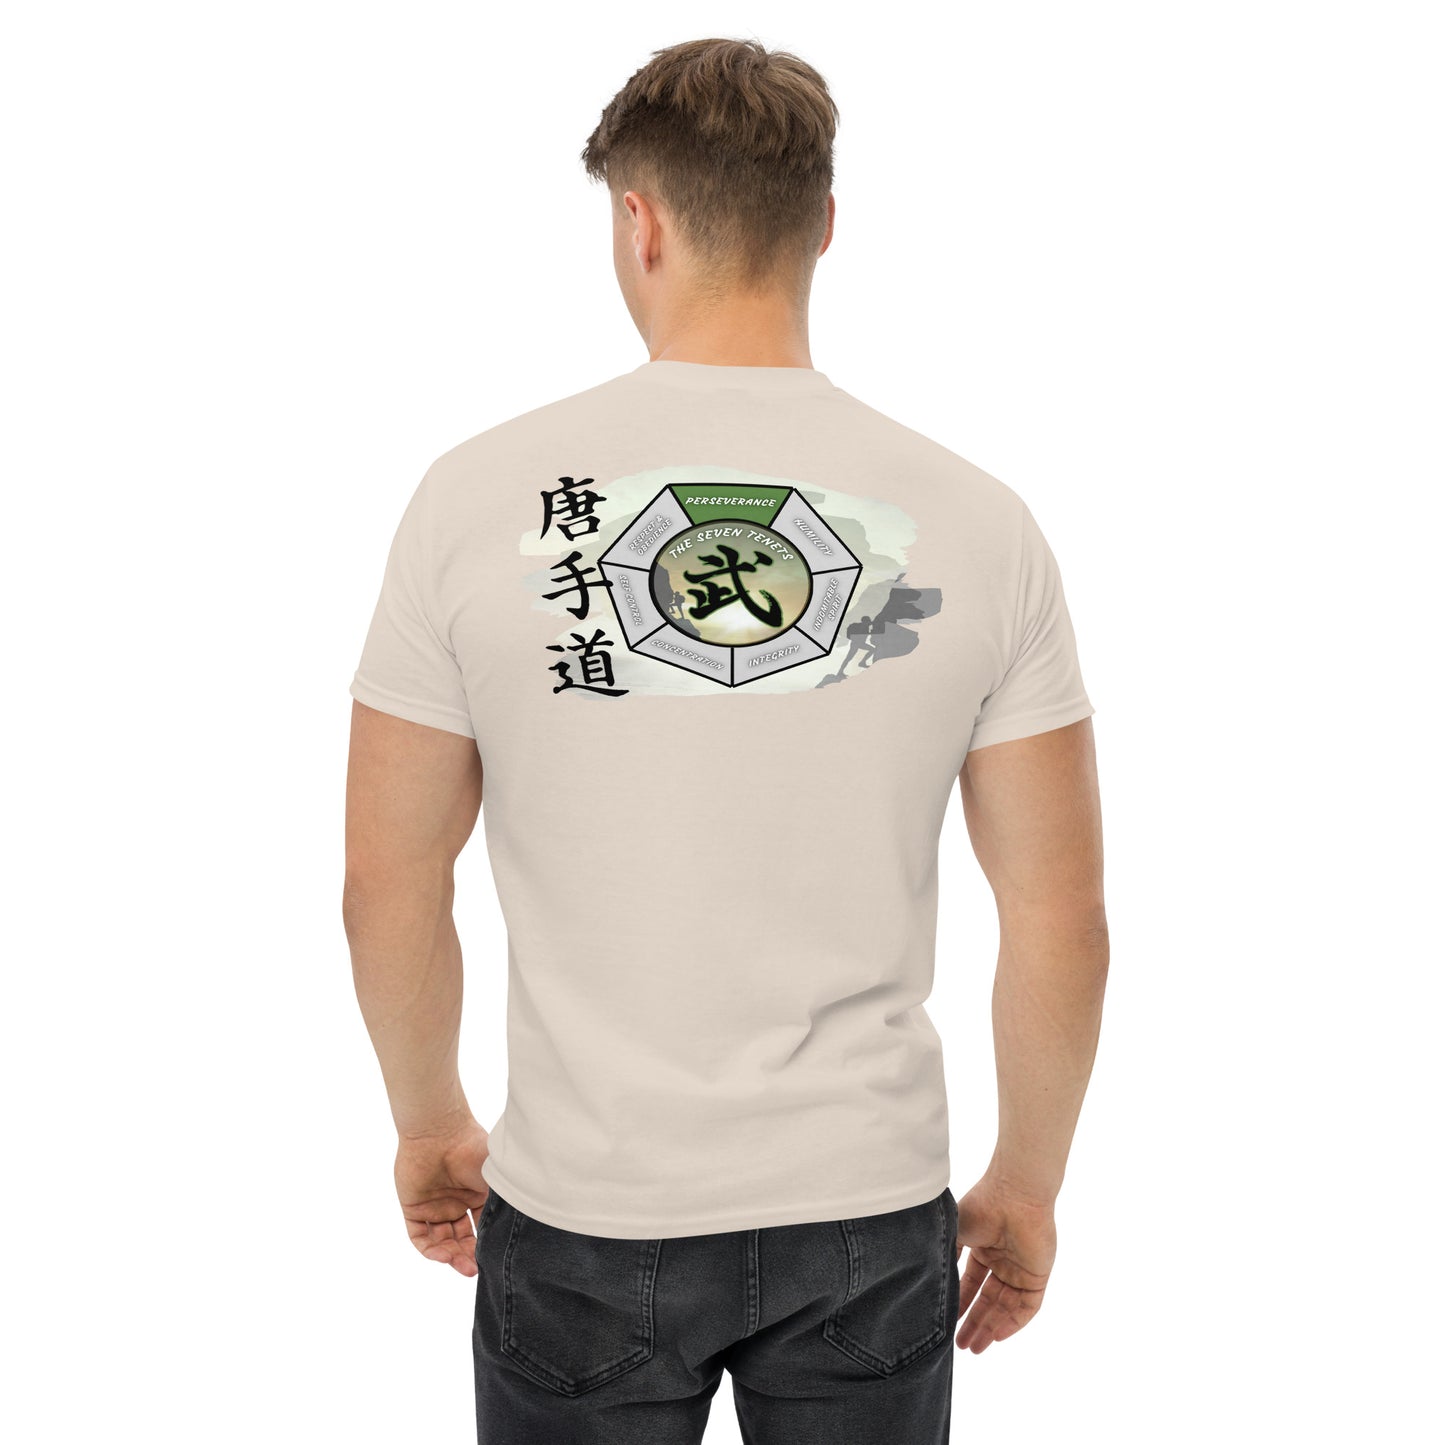 Perseverance - 7 Tenets Instructor Unisex T-Shirt